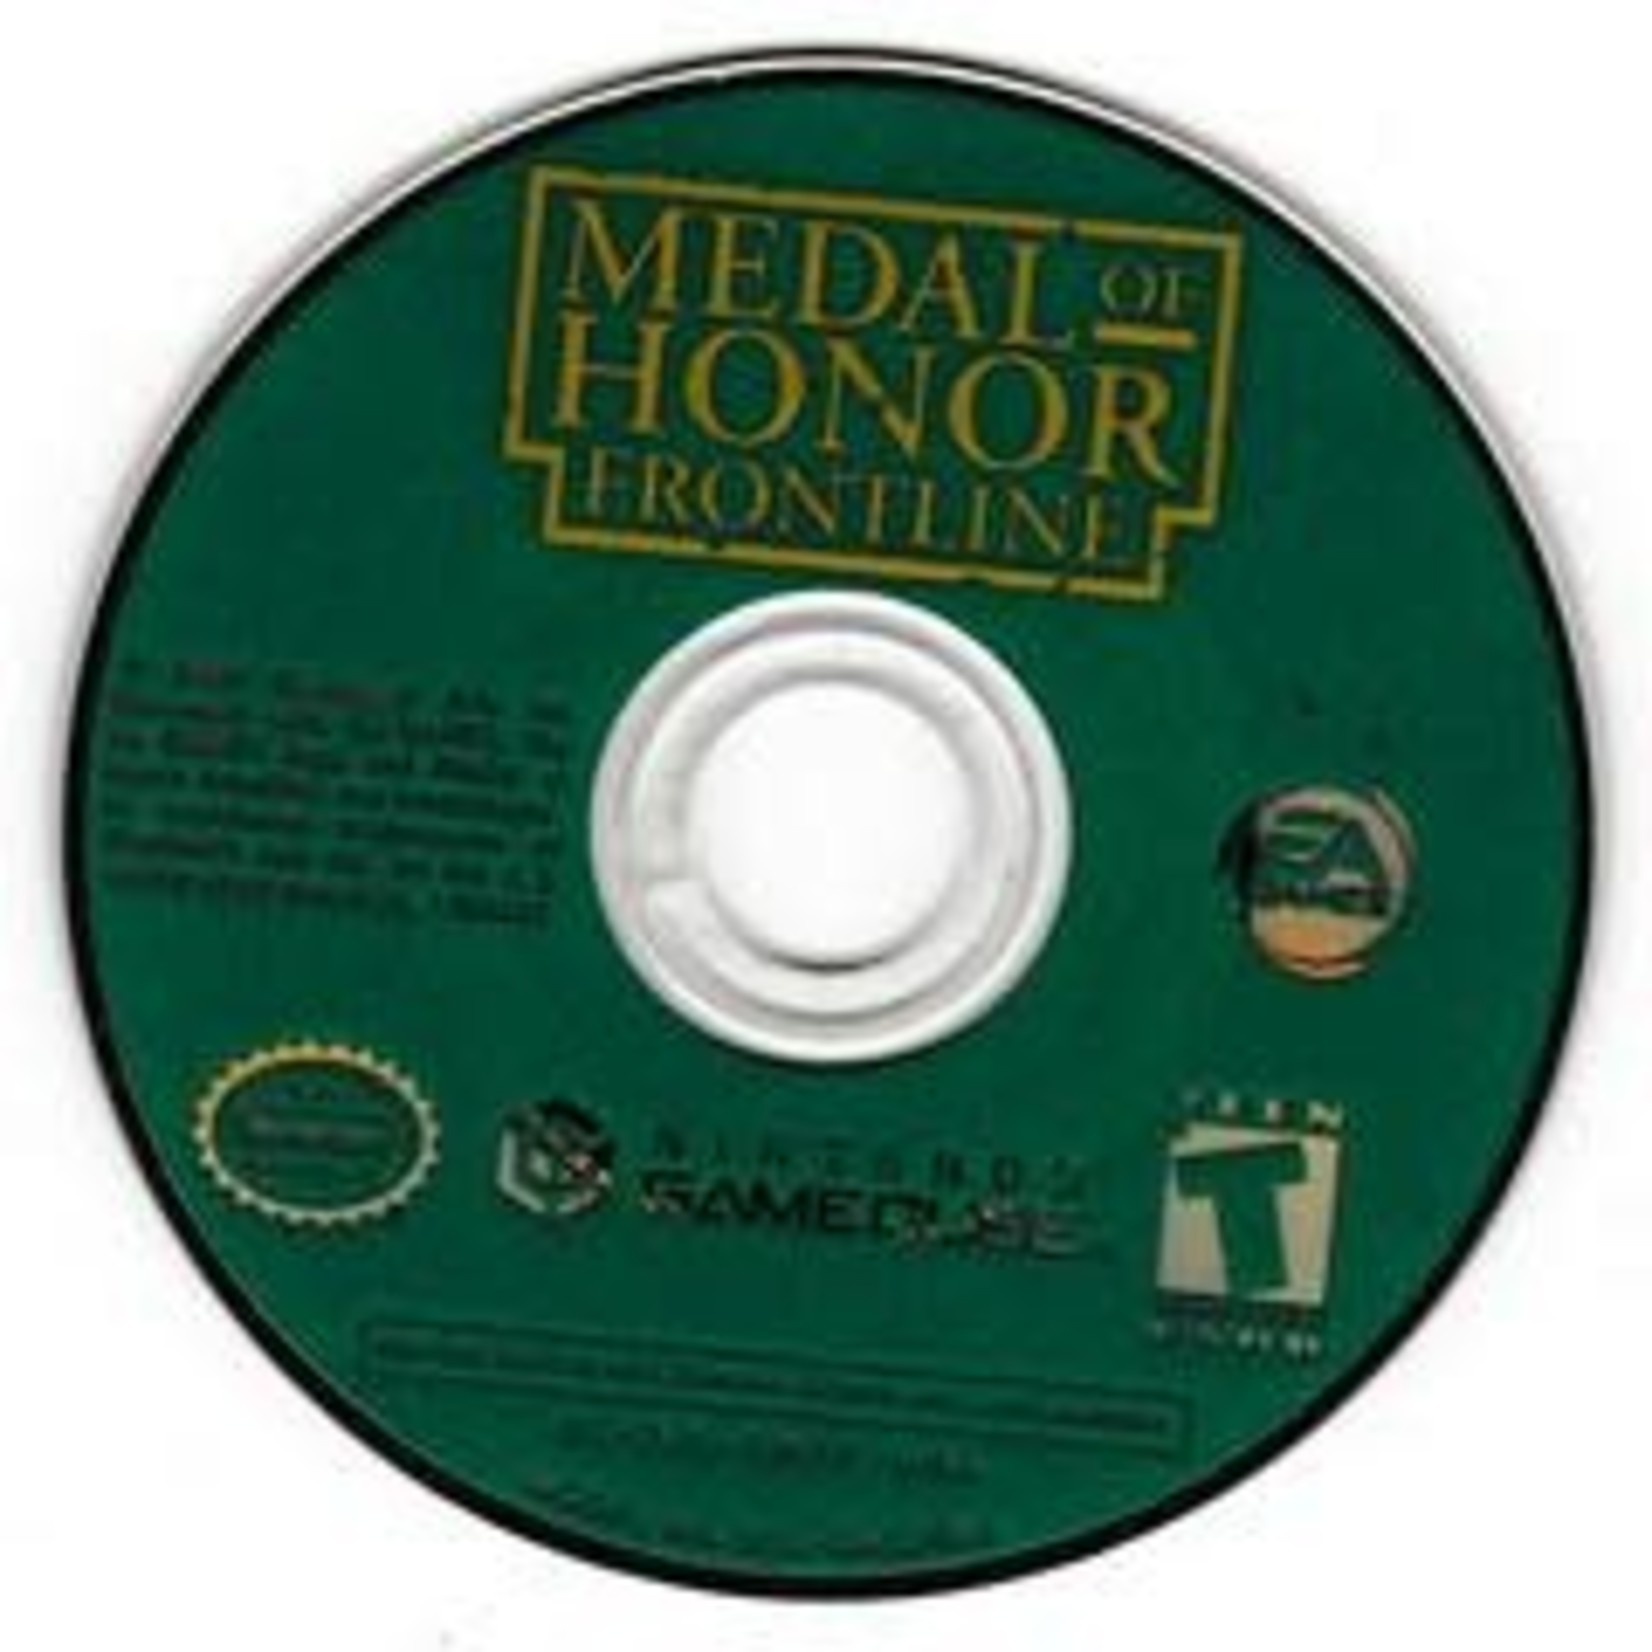 Nintendo Medal of Honor Frontline